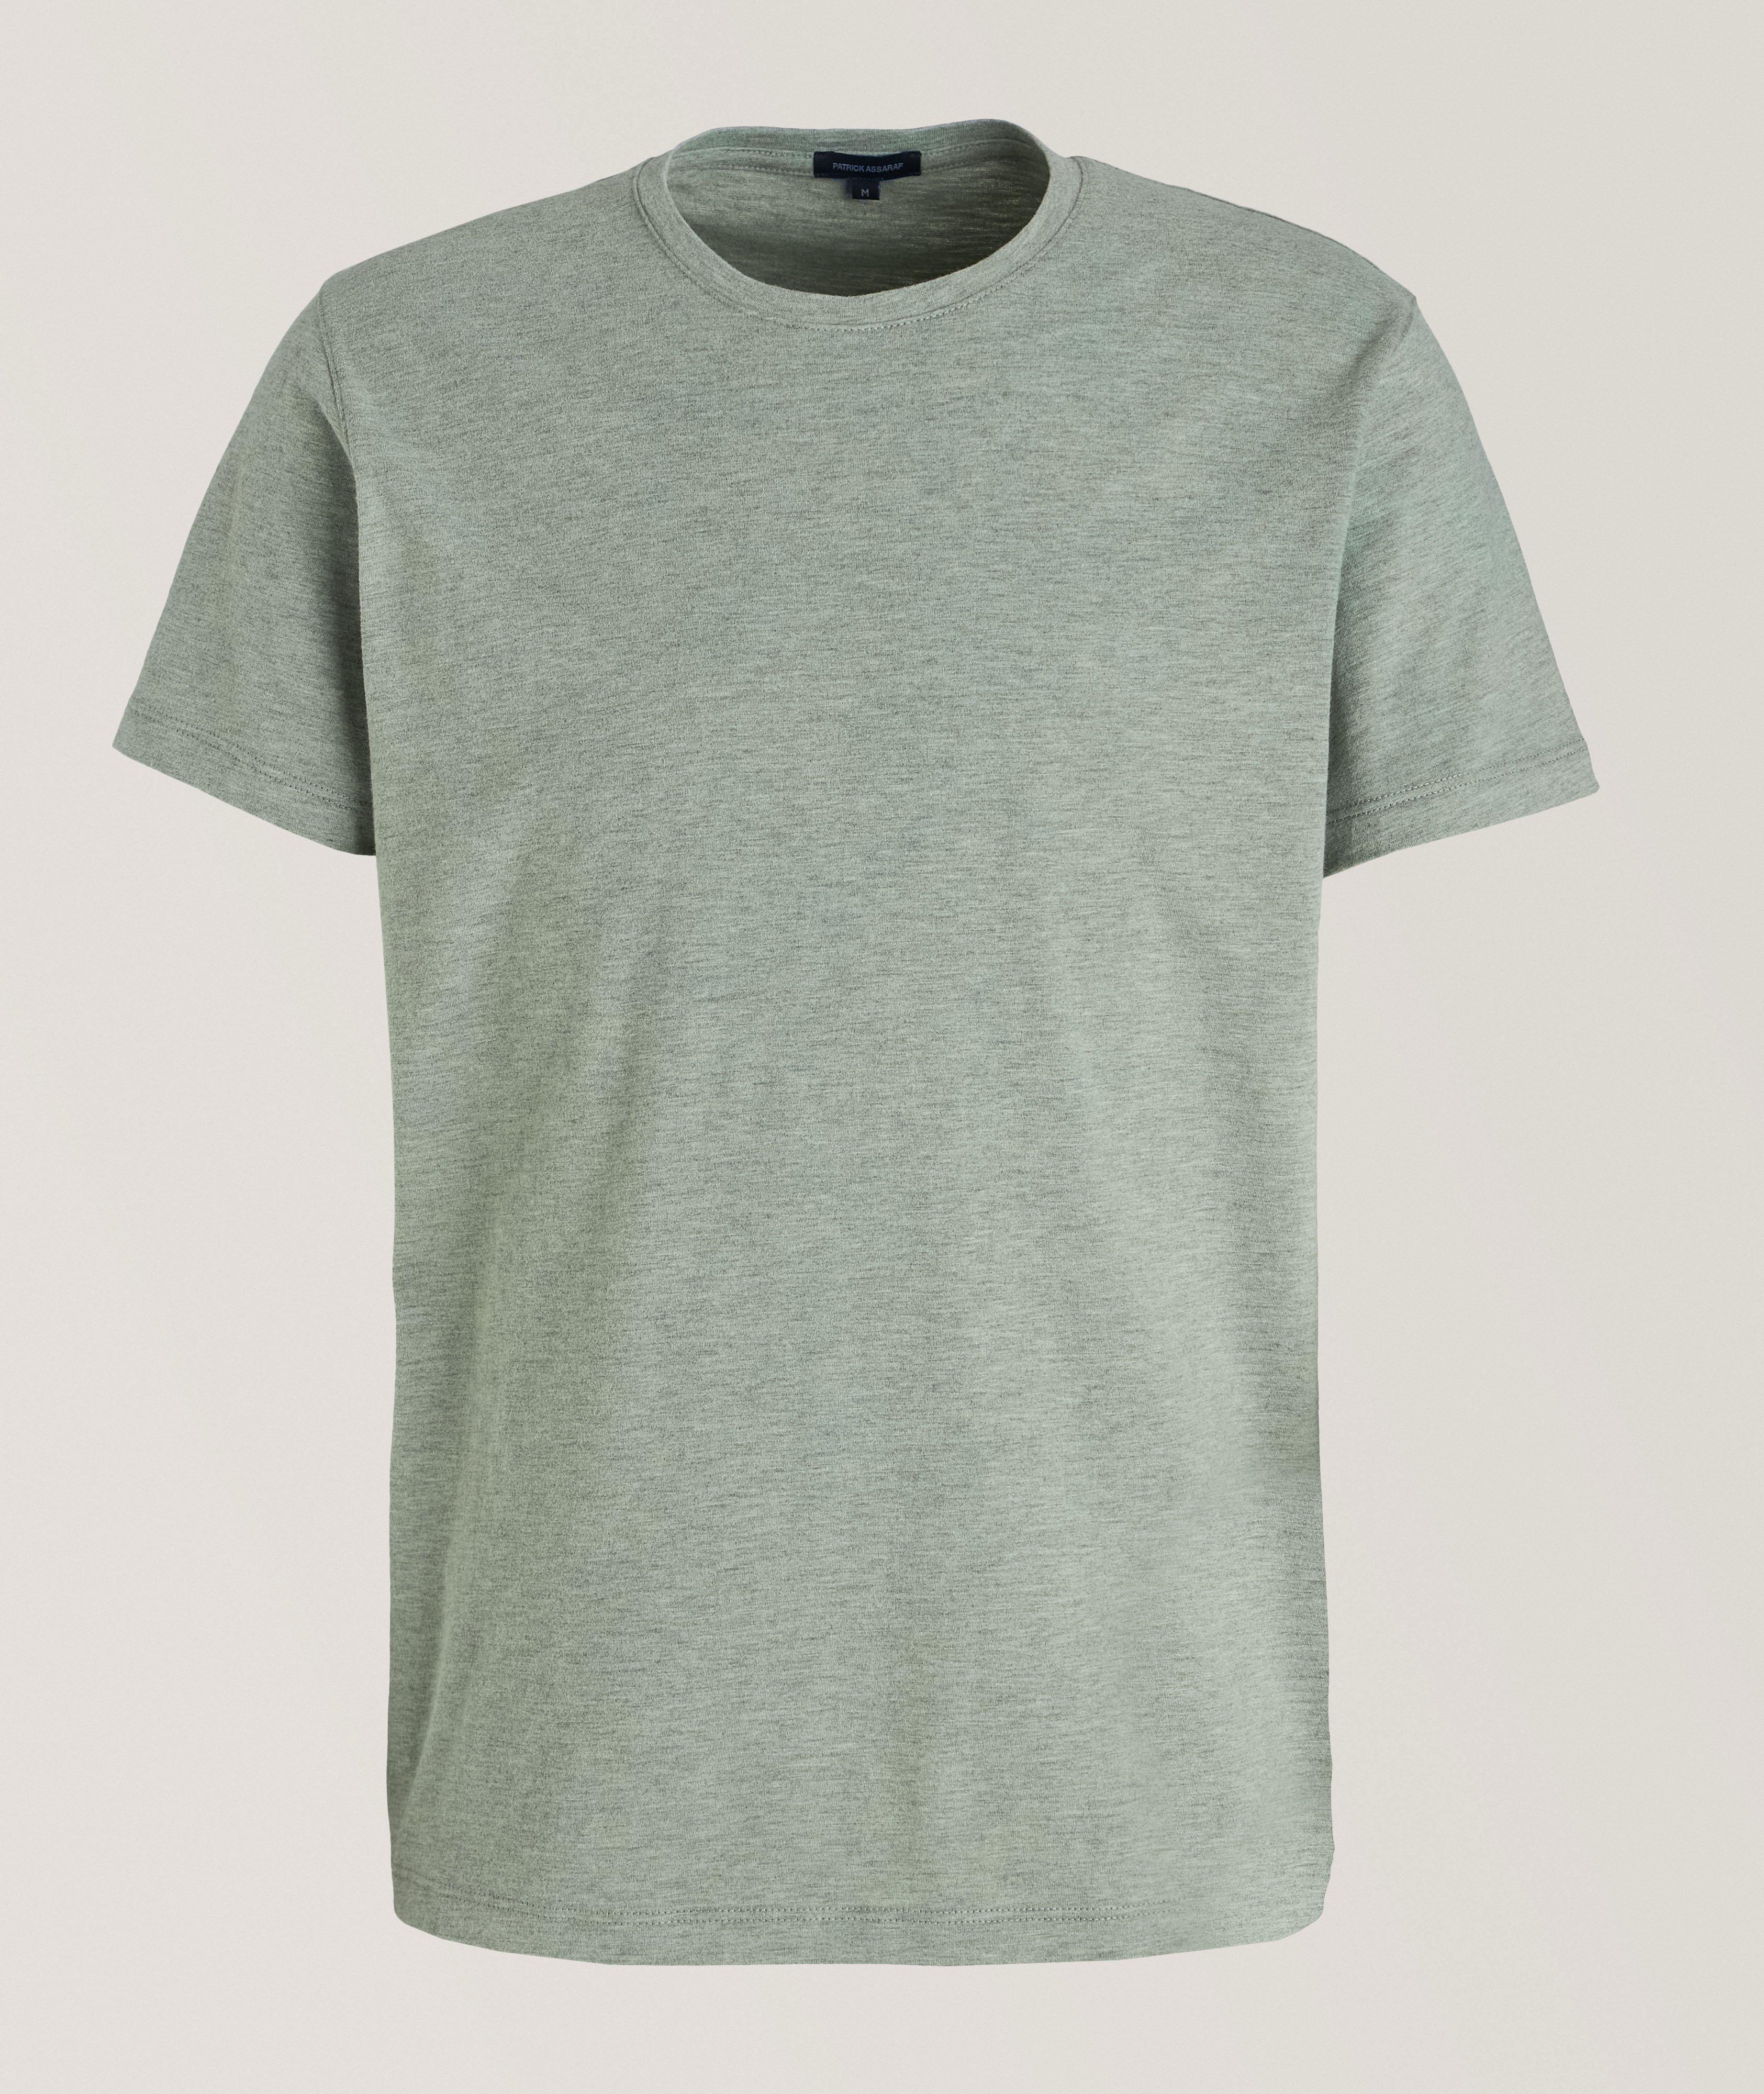 Overdye Heathered Pima Cotton-Blend T-Shirt image 0